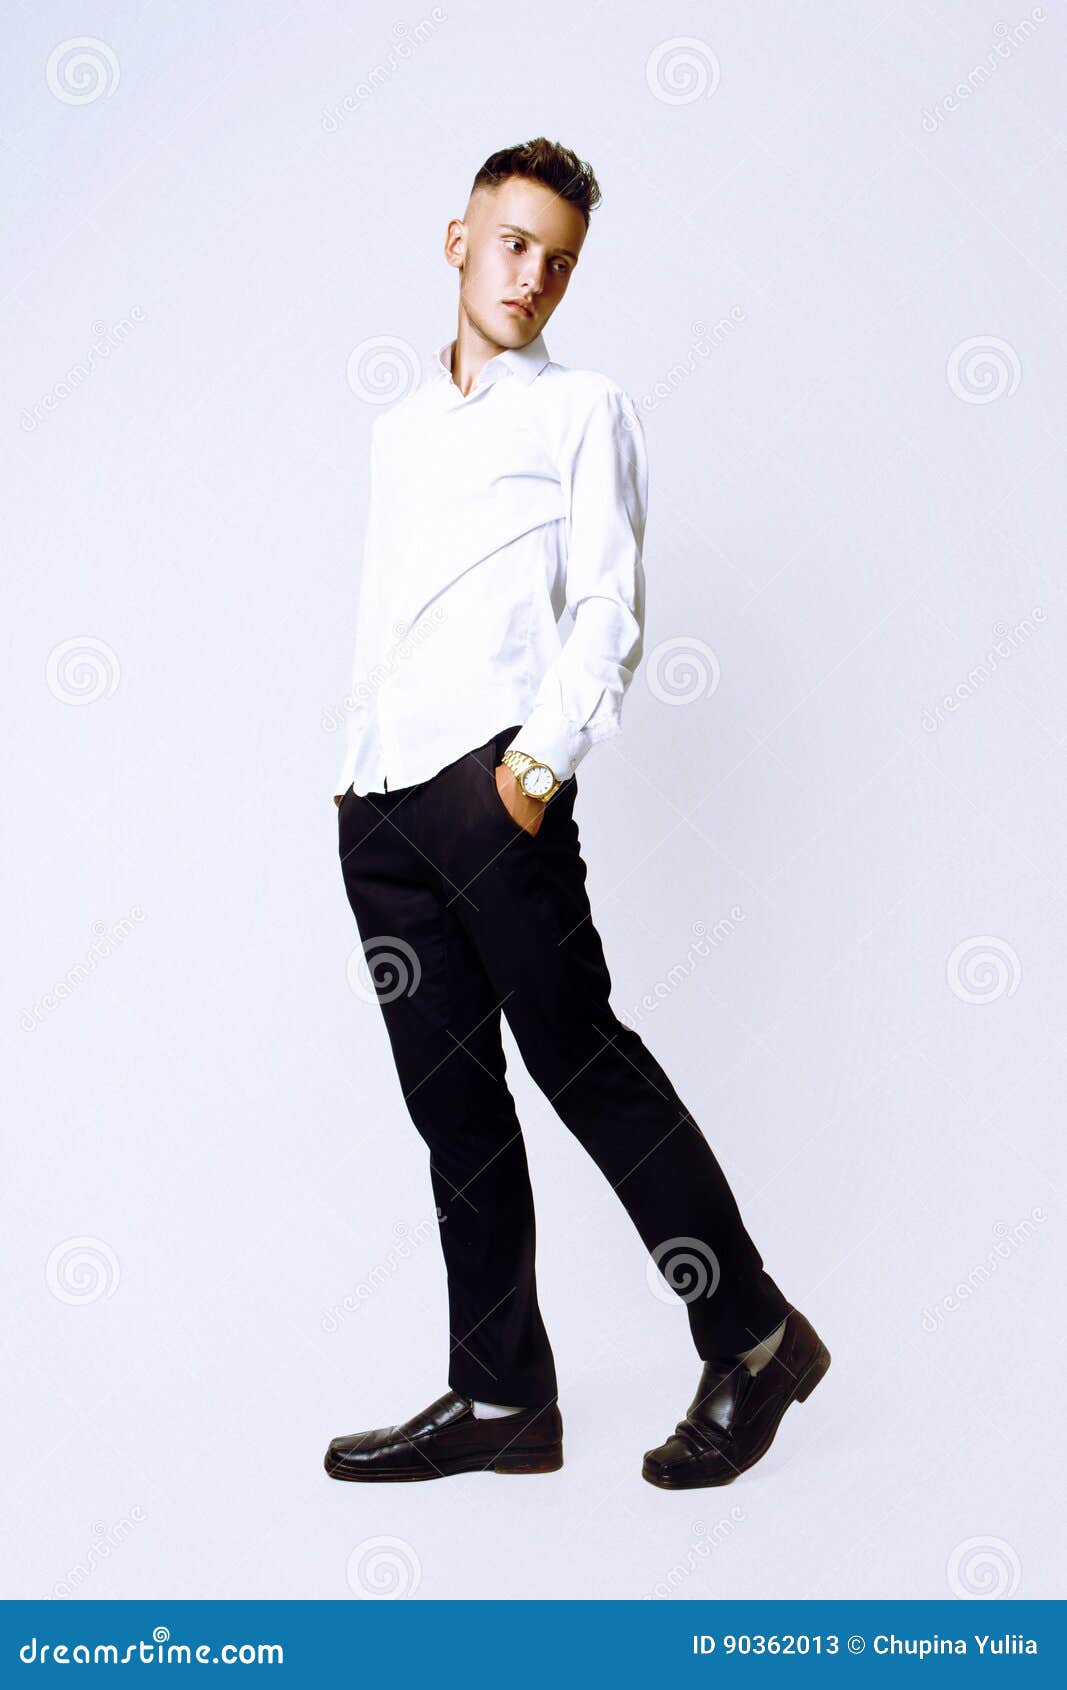 Modern Young Man Fashion Model Poses Stock Photo 2327387931 | Shutterstock-thanhphatduhoc.com.vn